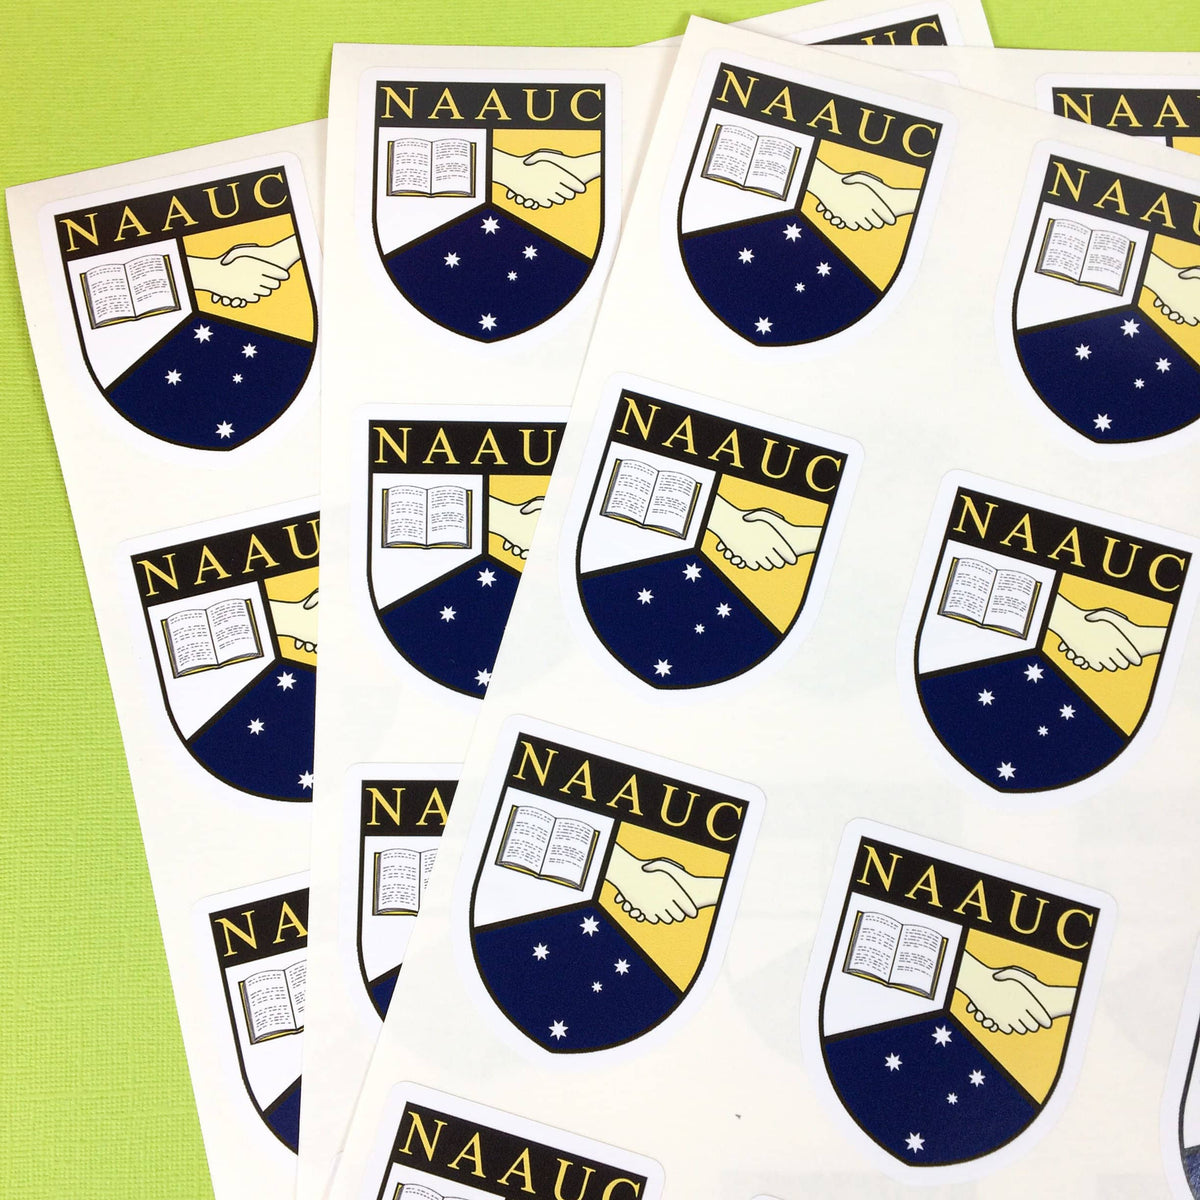 National Association of Australian University Colleges logo custom cut stickers on a sheet.